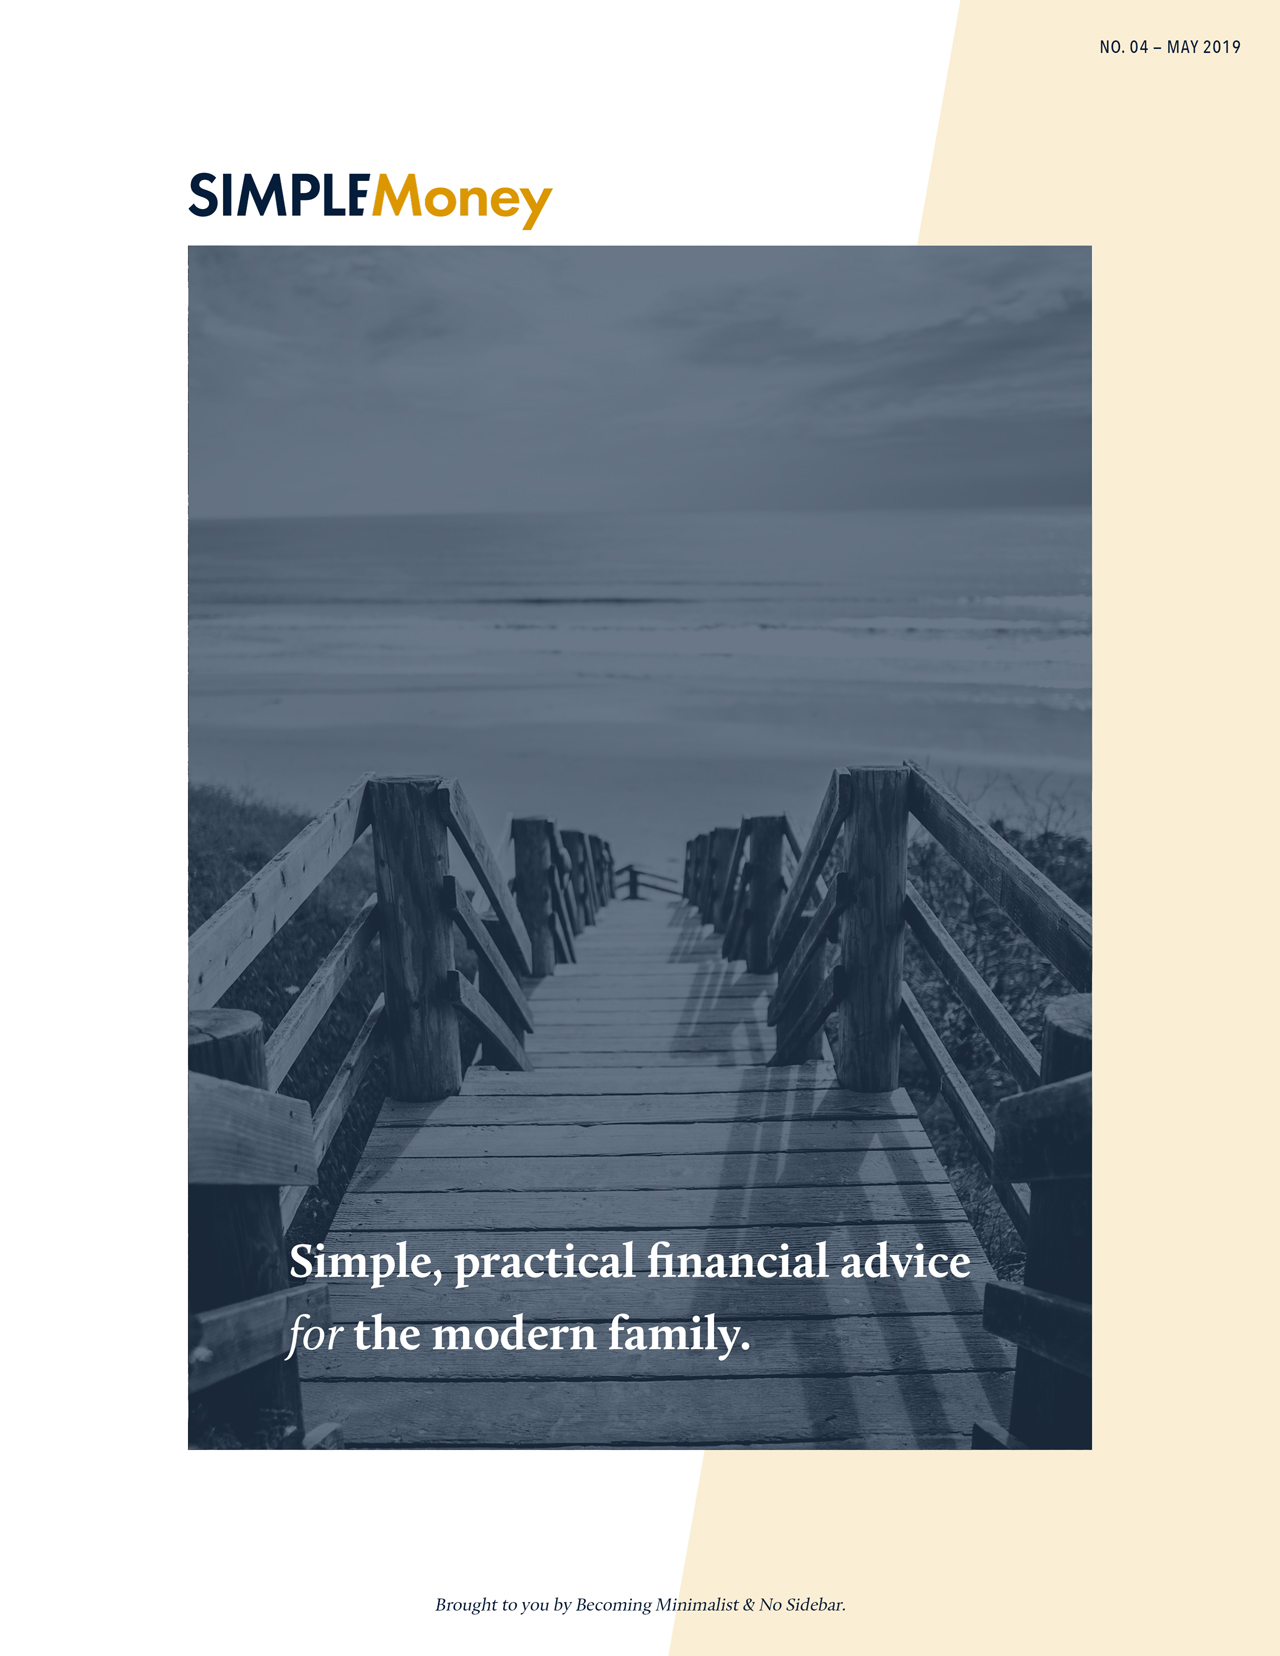 Simple Money Magazine Issue #04